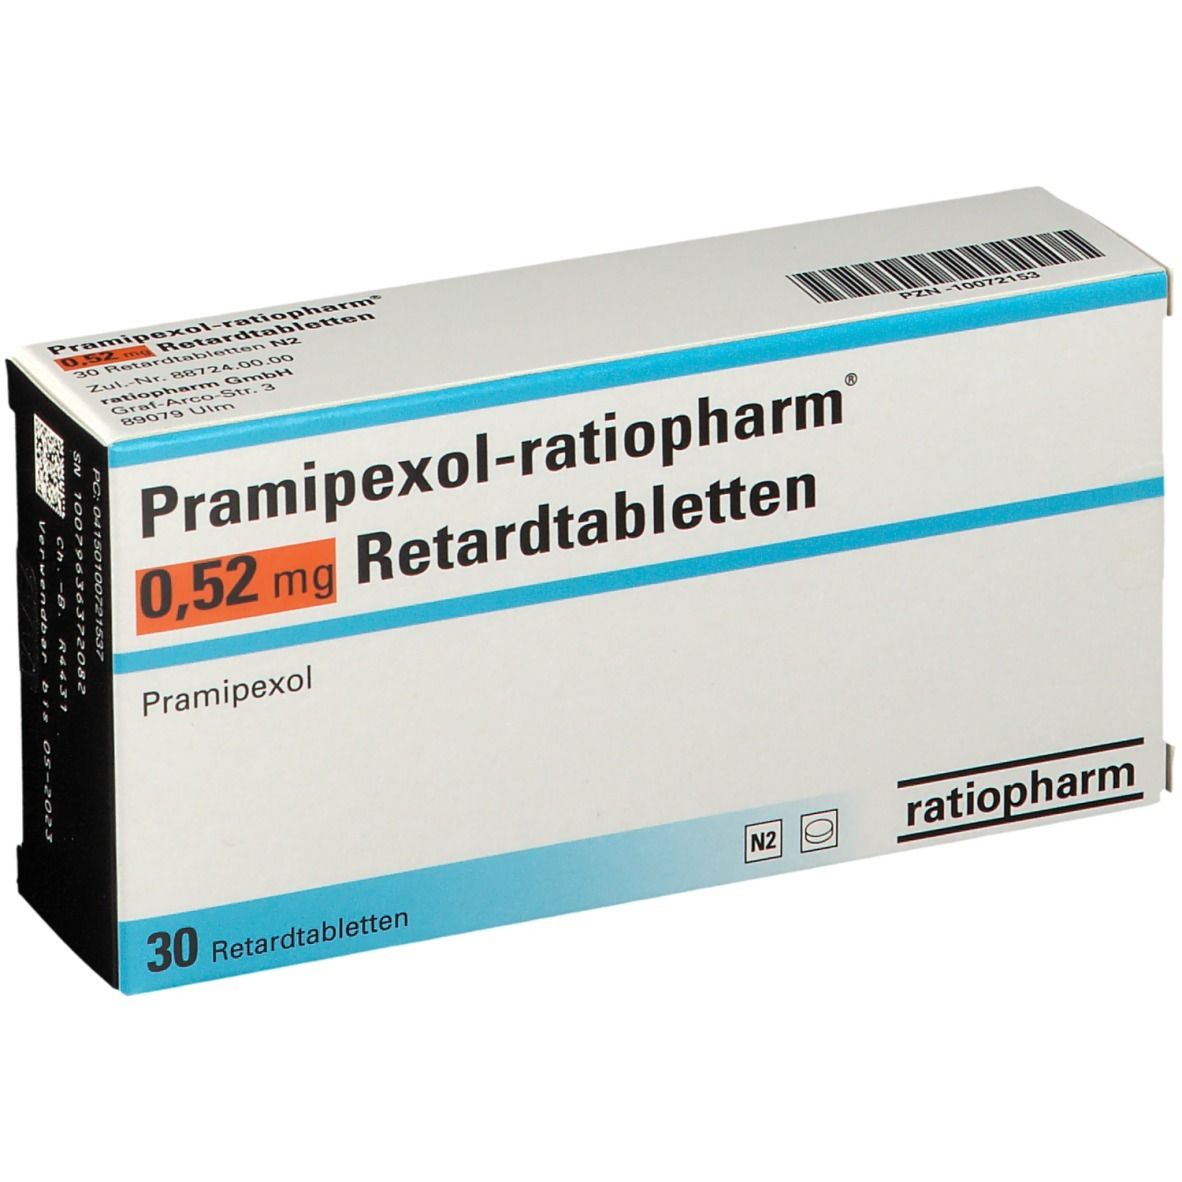 Pramipexol-ratiopharm® 0,52 mg